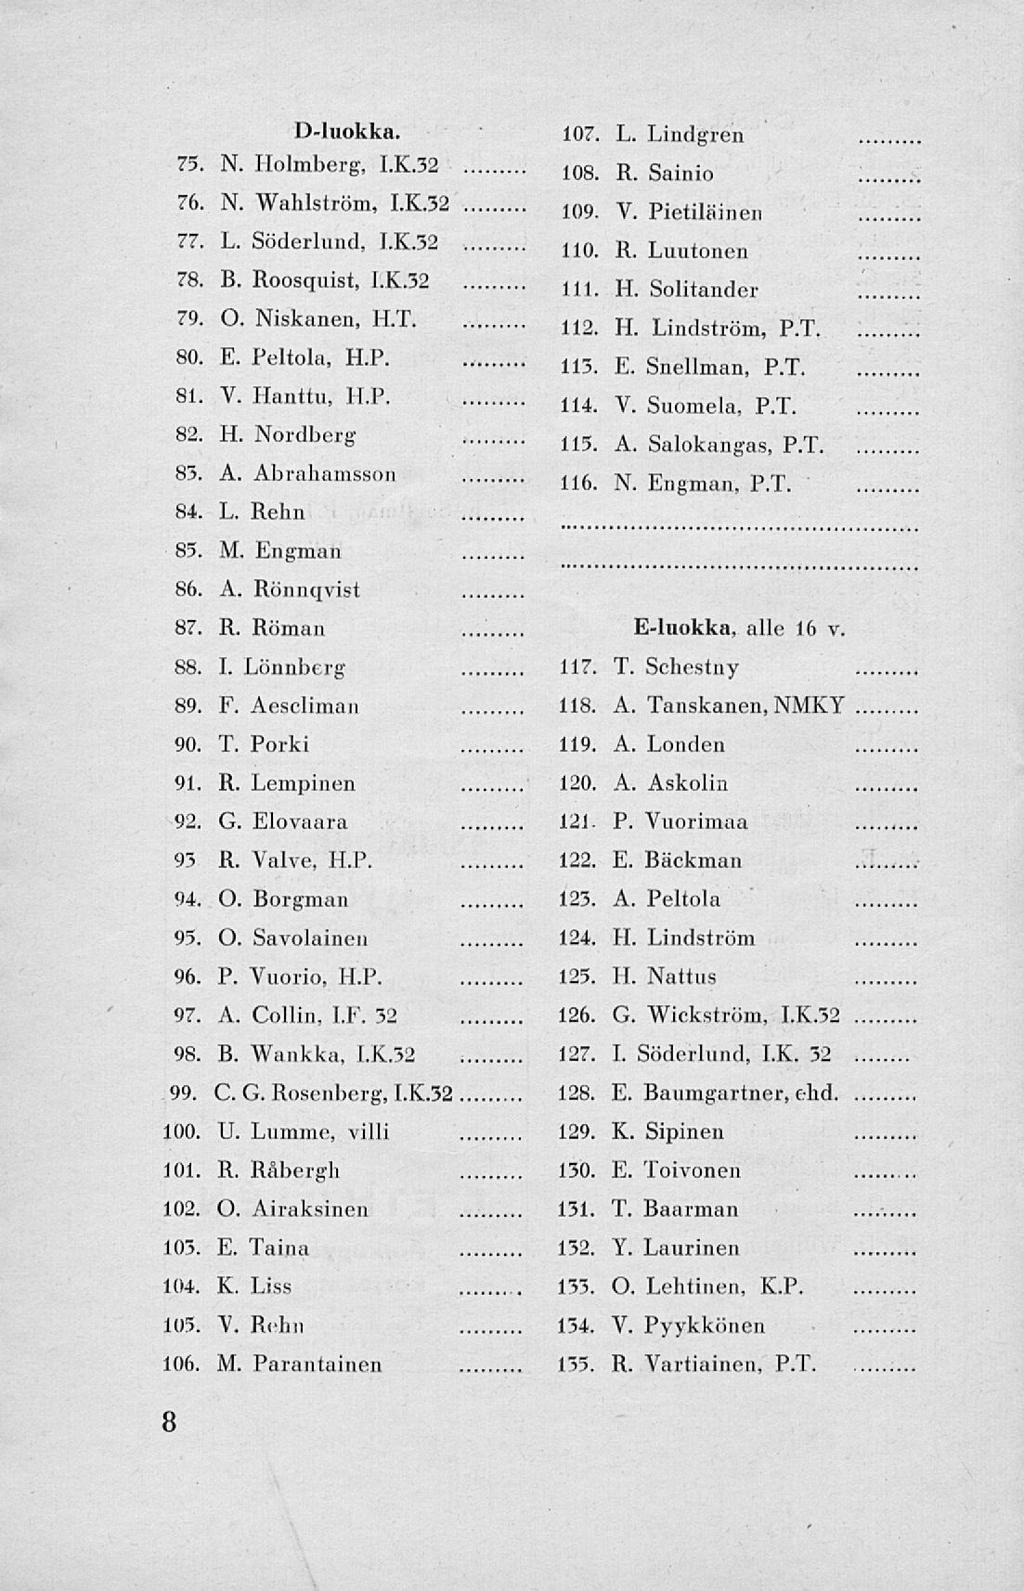 75, 76 77. 78. 79. D-luokka. N. Holmberg, 1.K.32 N. Wahlström, 1.K.32 L. Söderlund, 1.K.32 B. Roosquist, 1.K.32 O. Niskanen, H.T. 80. E. Peltola, H.P. 81 82. 83. 84 V. Hanttu, H.P. H. Nordberg A.